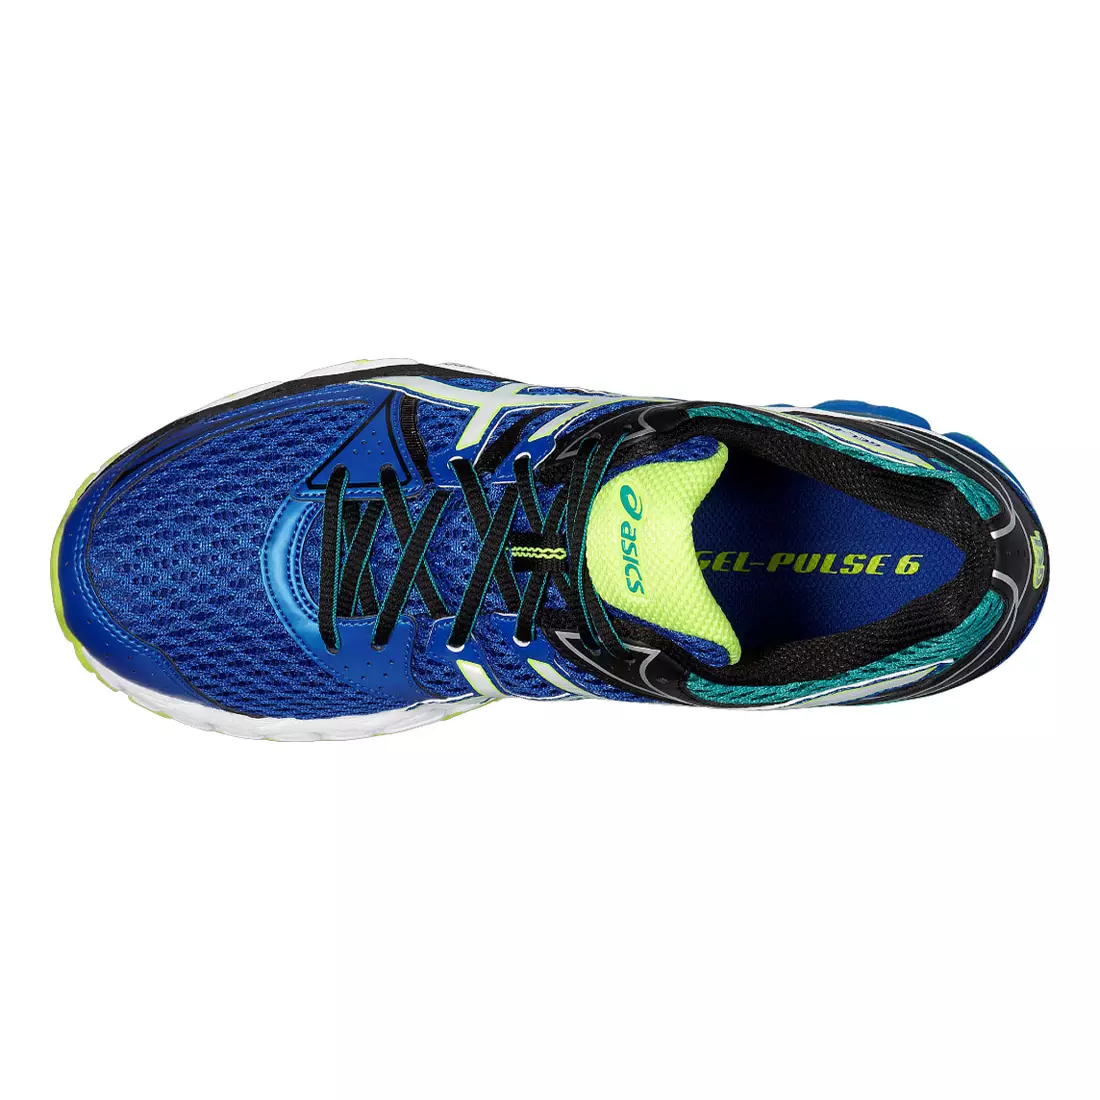 ASICS GEL-PULSE 6 running shoes 4200